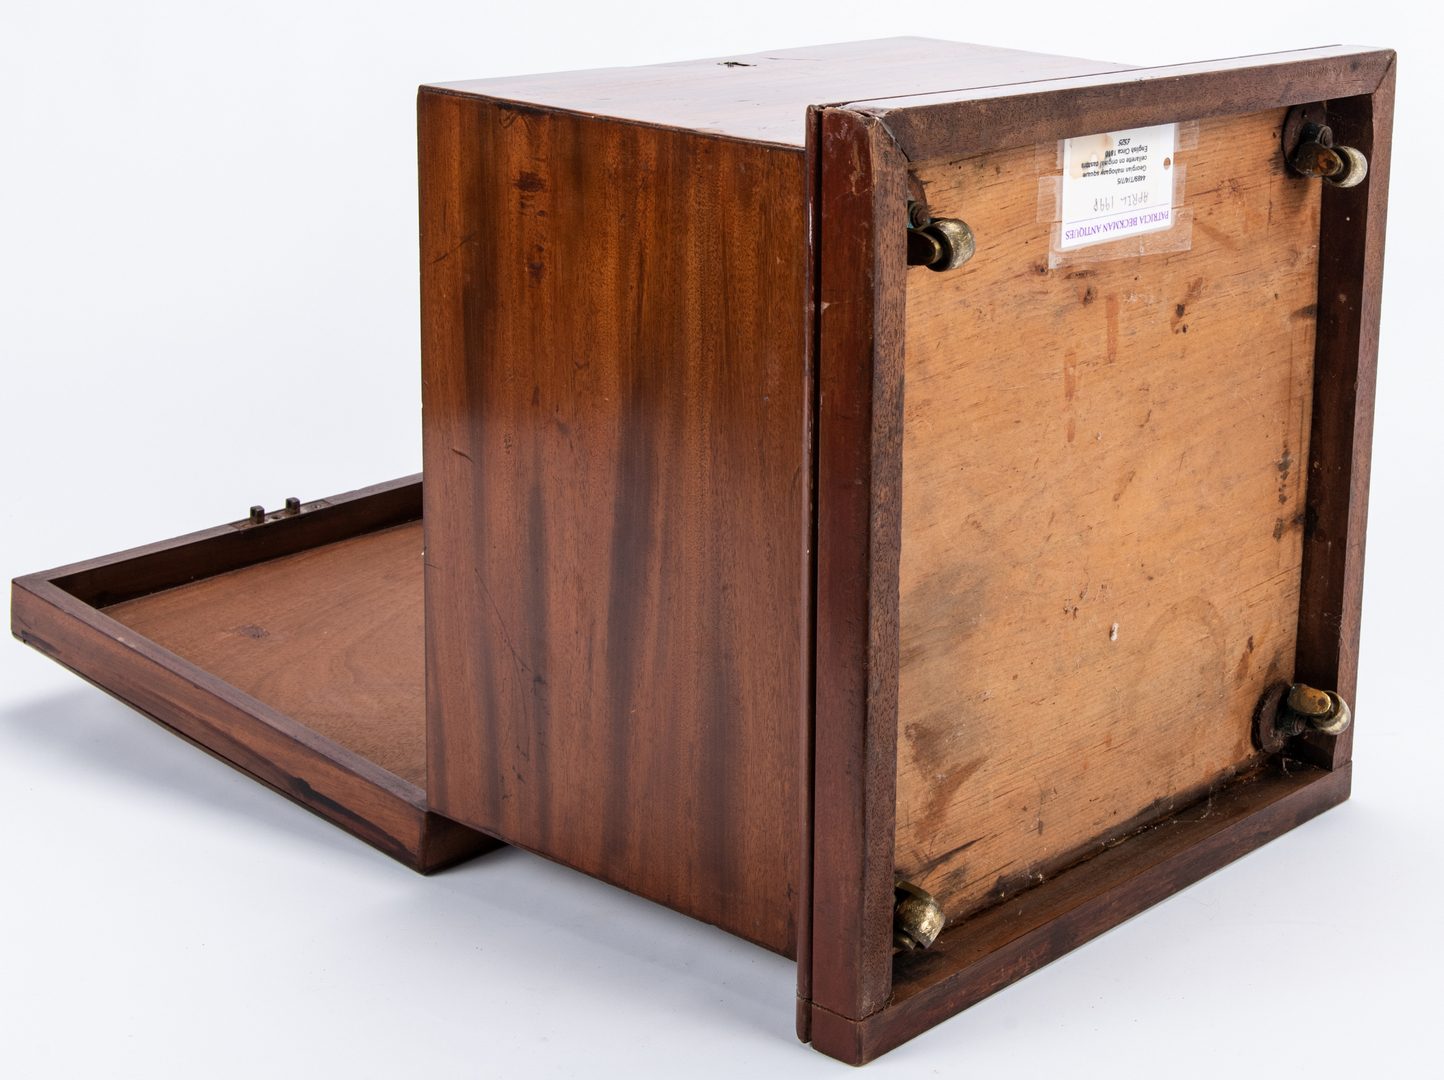 Lot 240: English Mahogany Cellarette Box